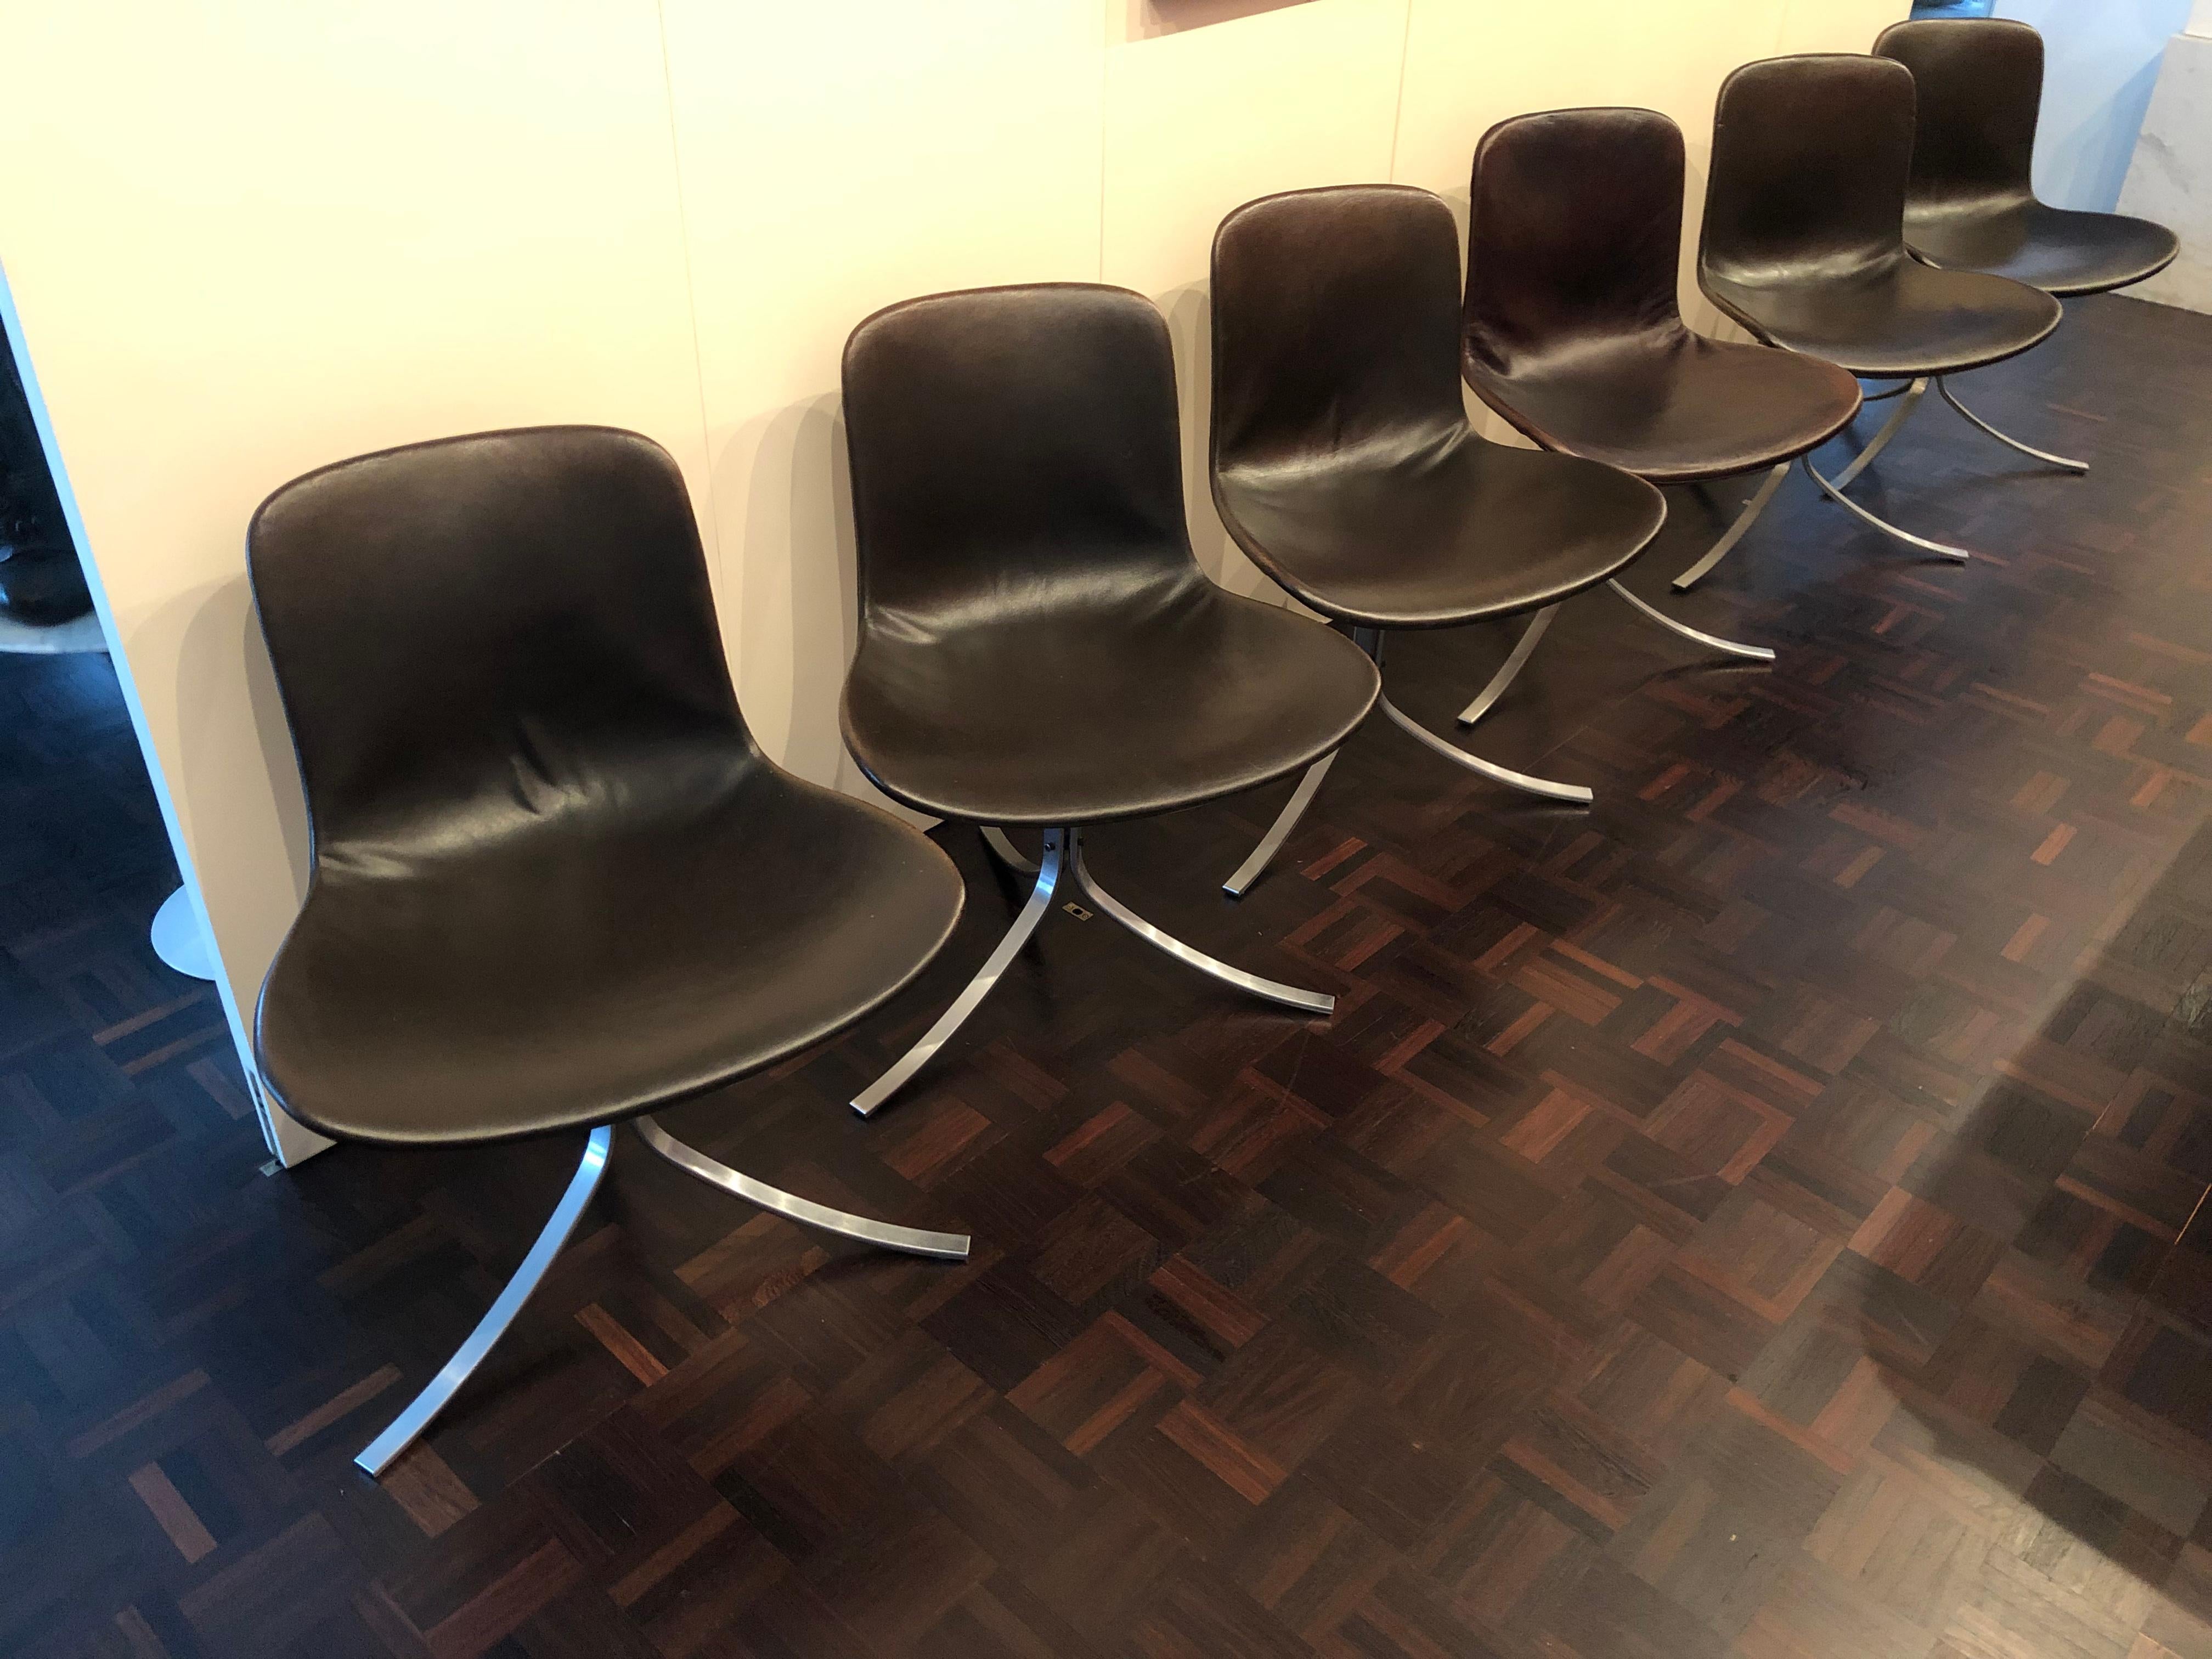 6 Chairs PK9 from Poul Kjaerholm for Kold Christensen For Sale 2